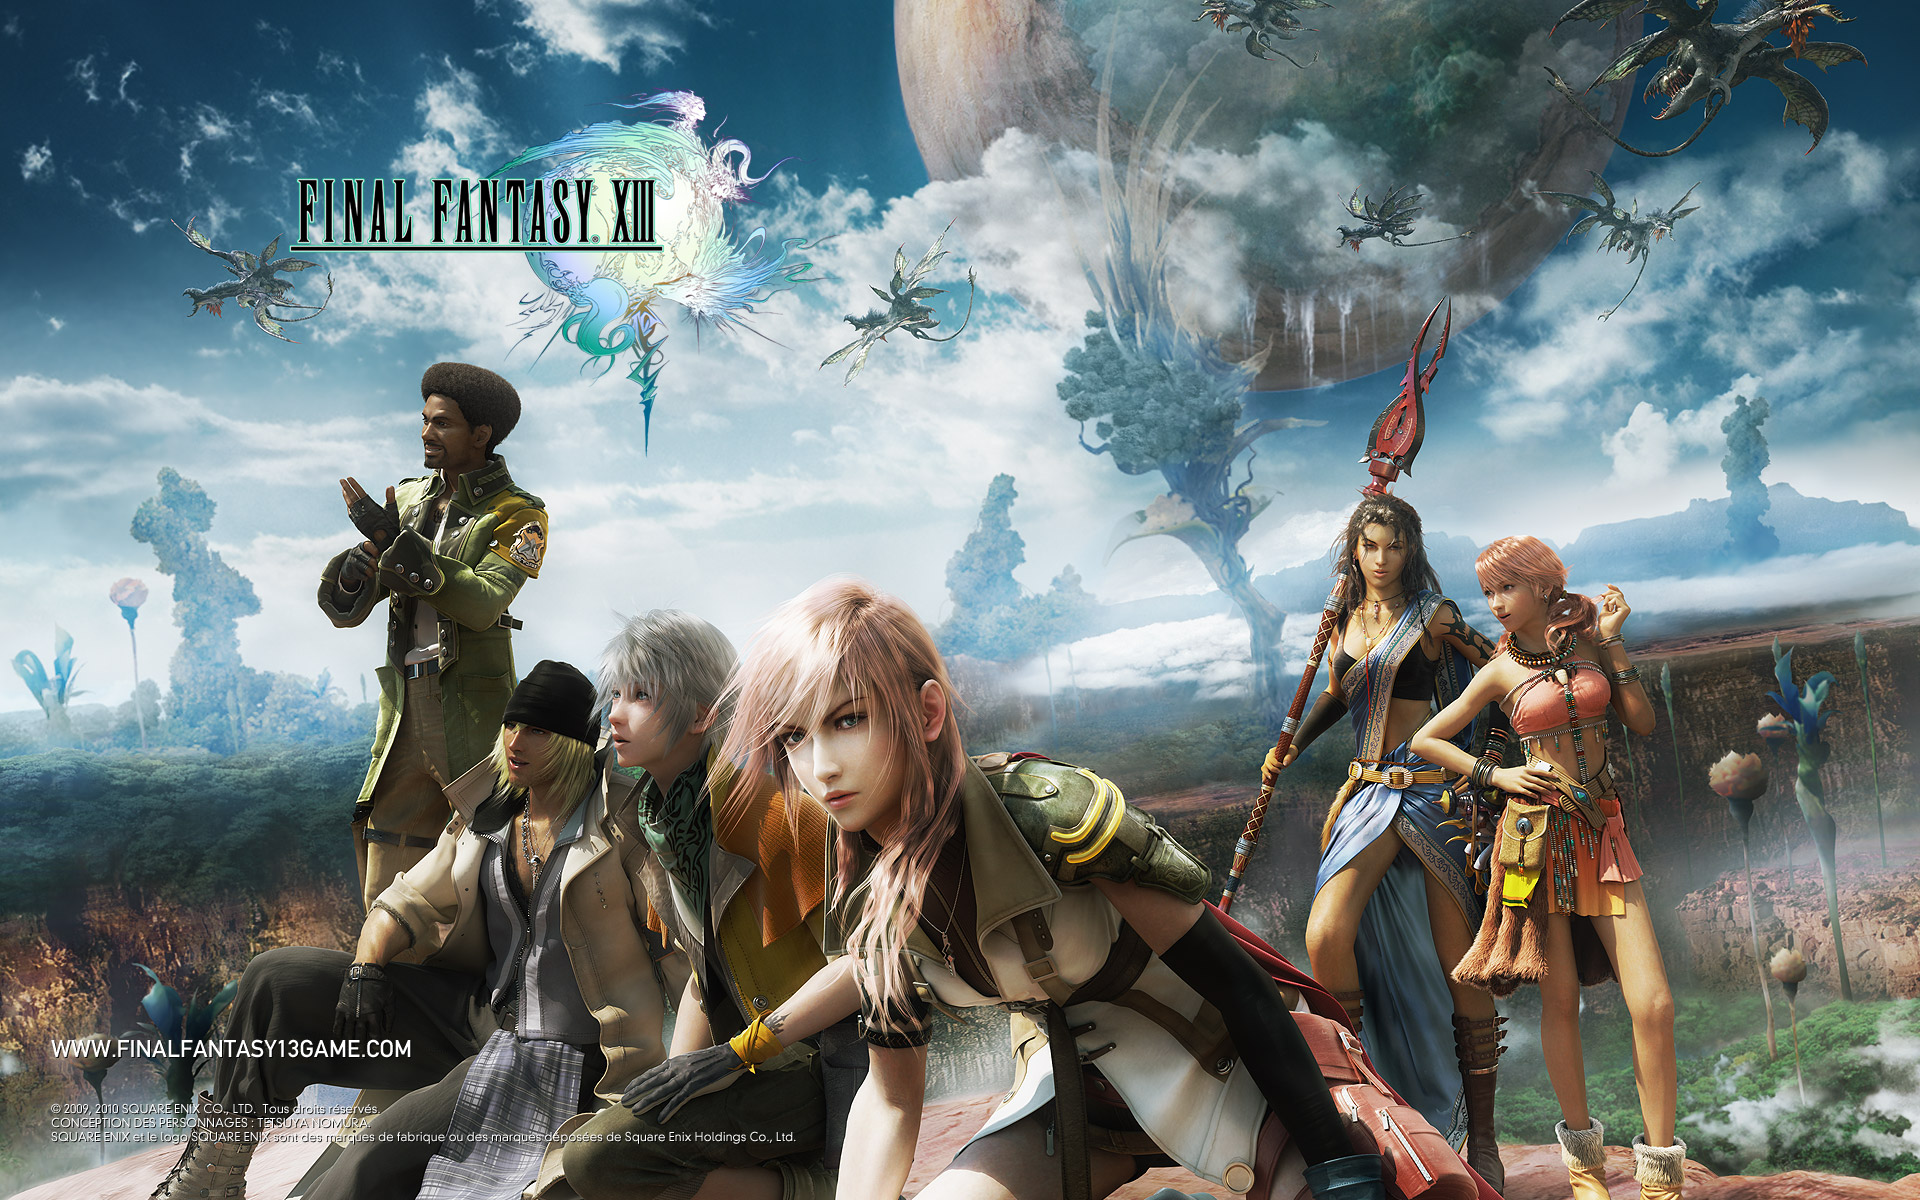 Final Fantasy Xiii Podria Ser La Pr Xima Propuesta De Square Enix